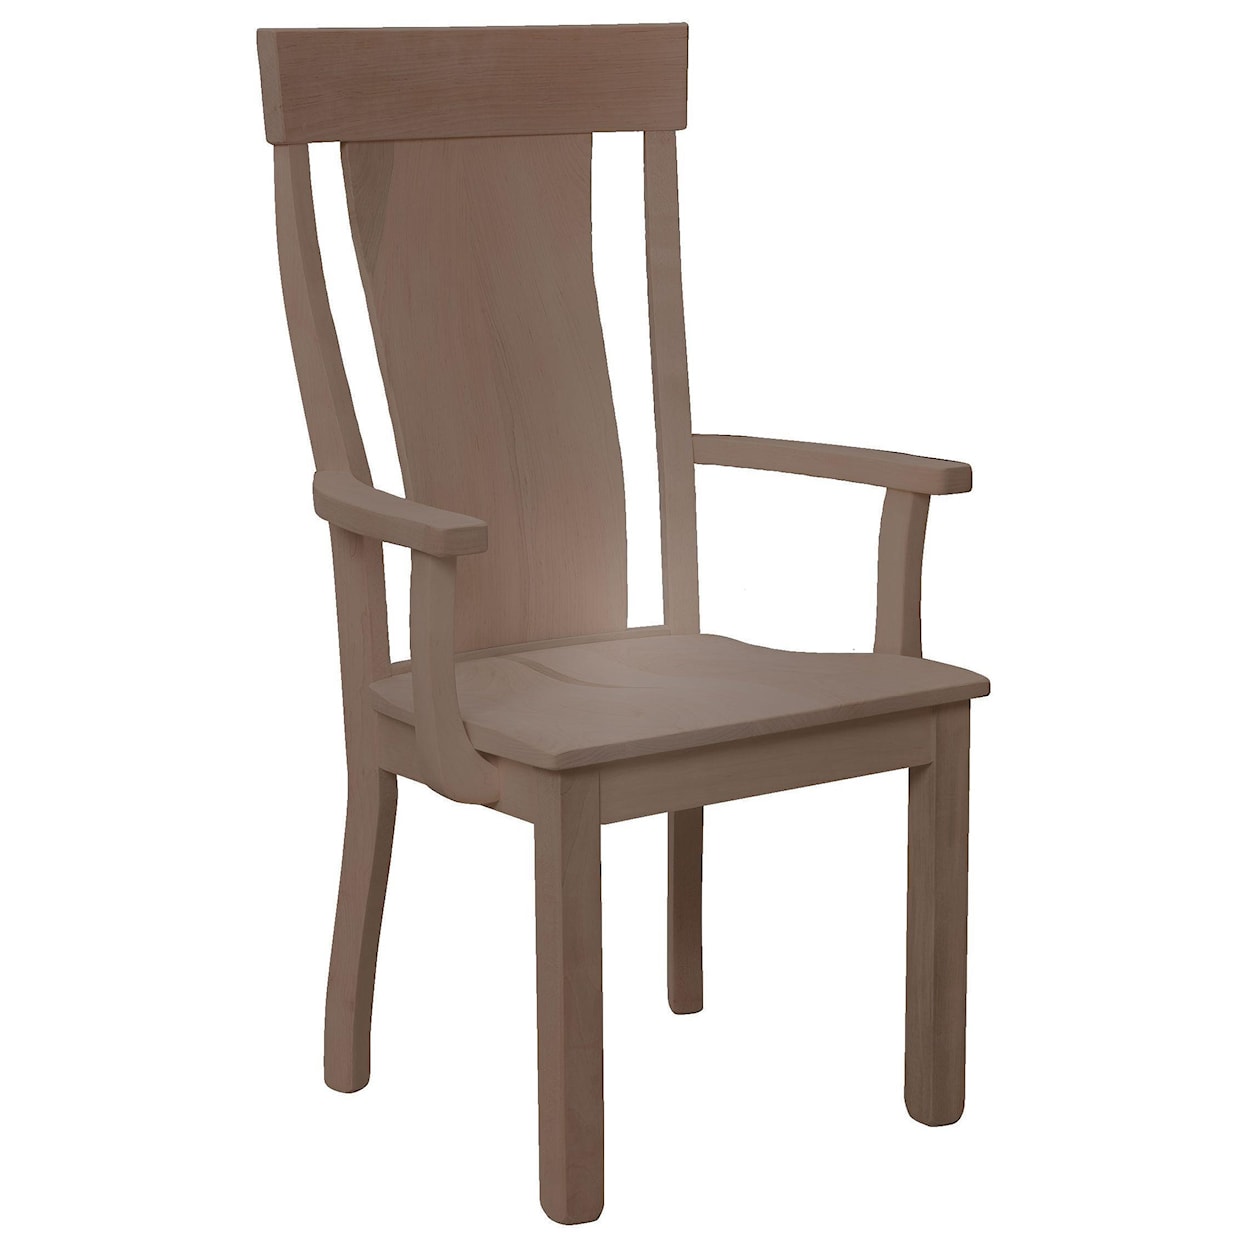 Wengerd Wood Products Weldon Arm Chair